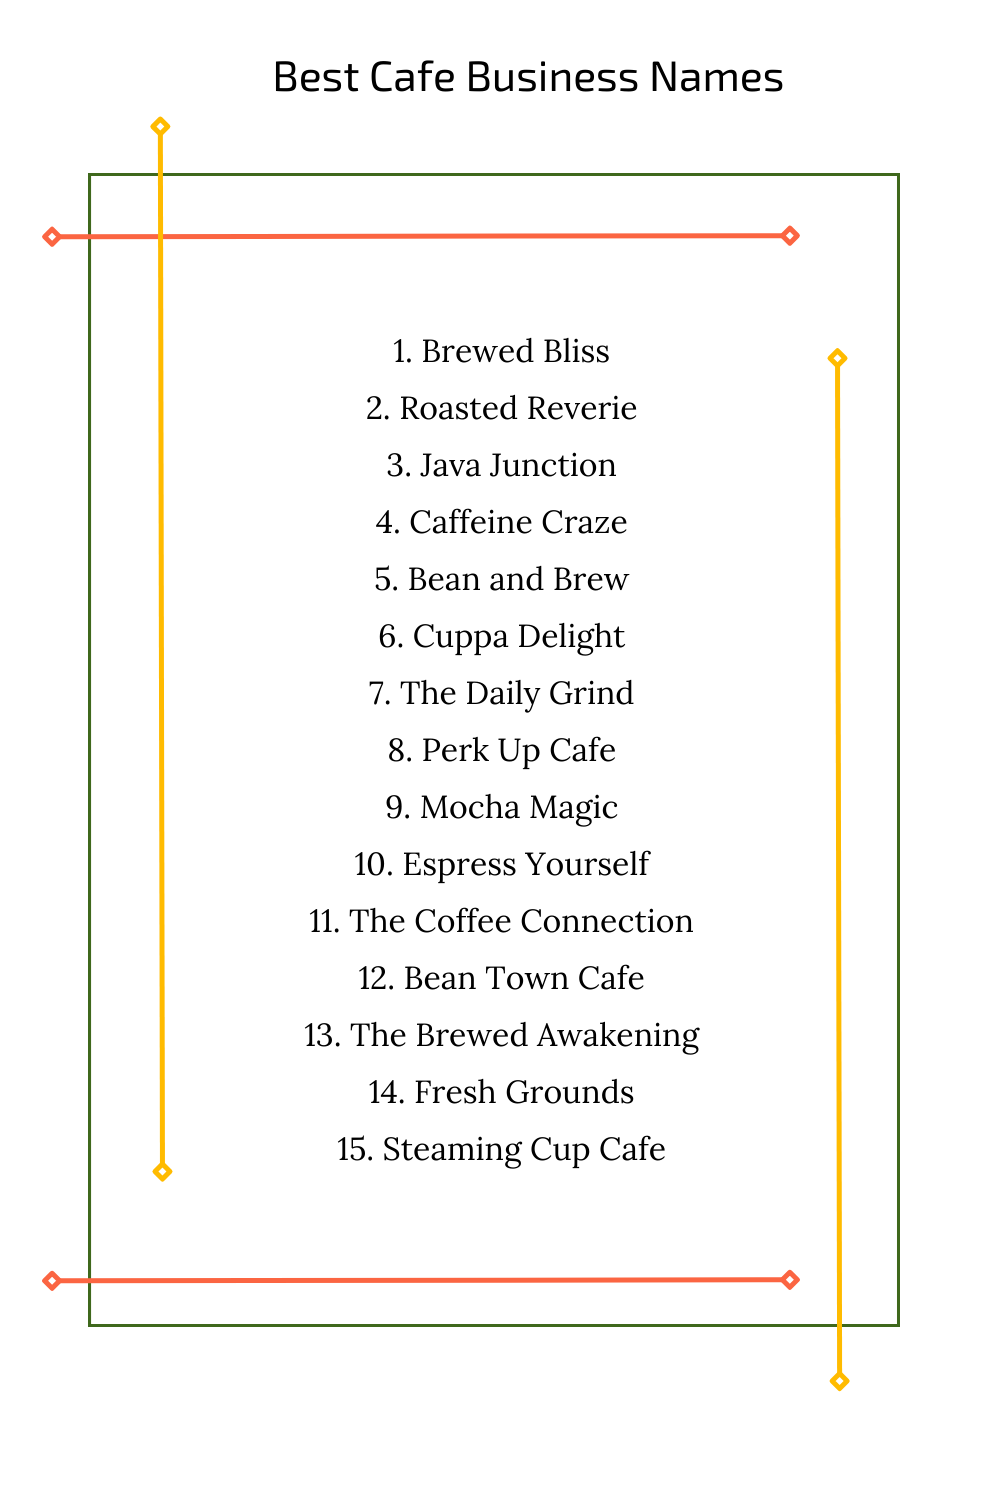 Best Cafe Business Names